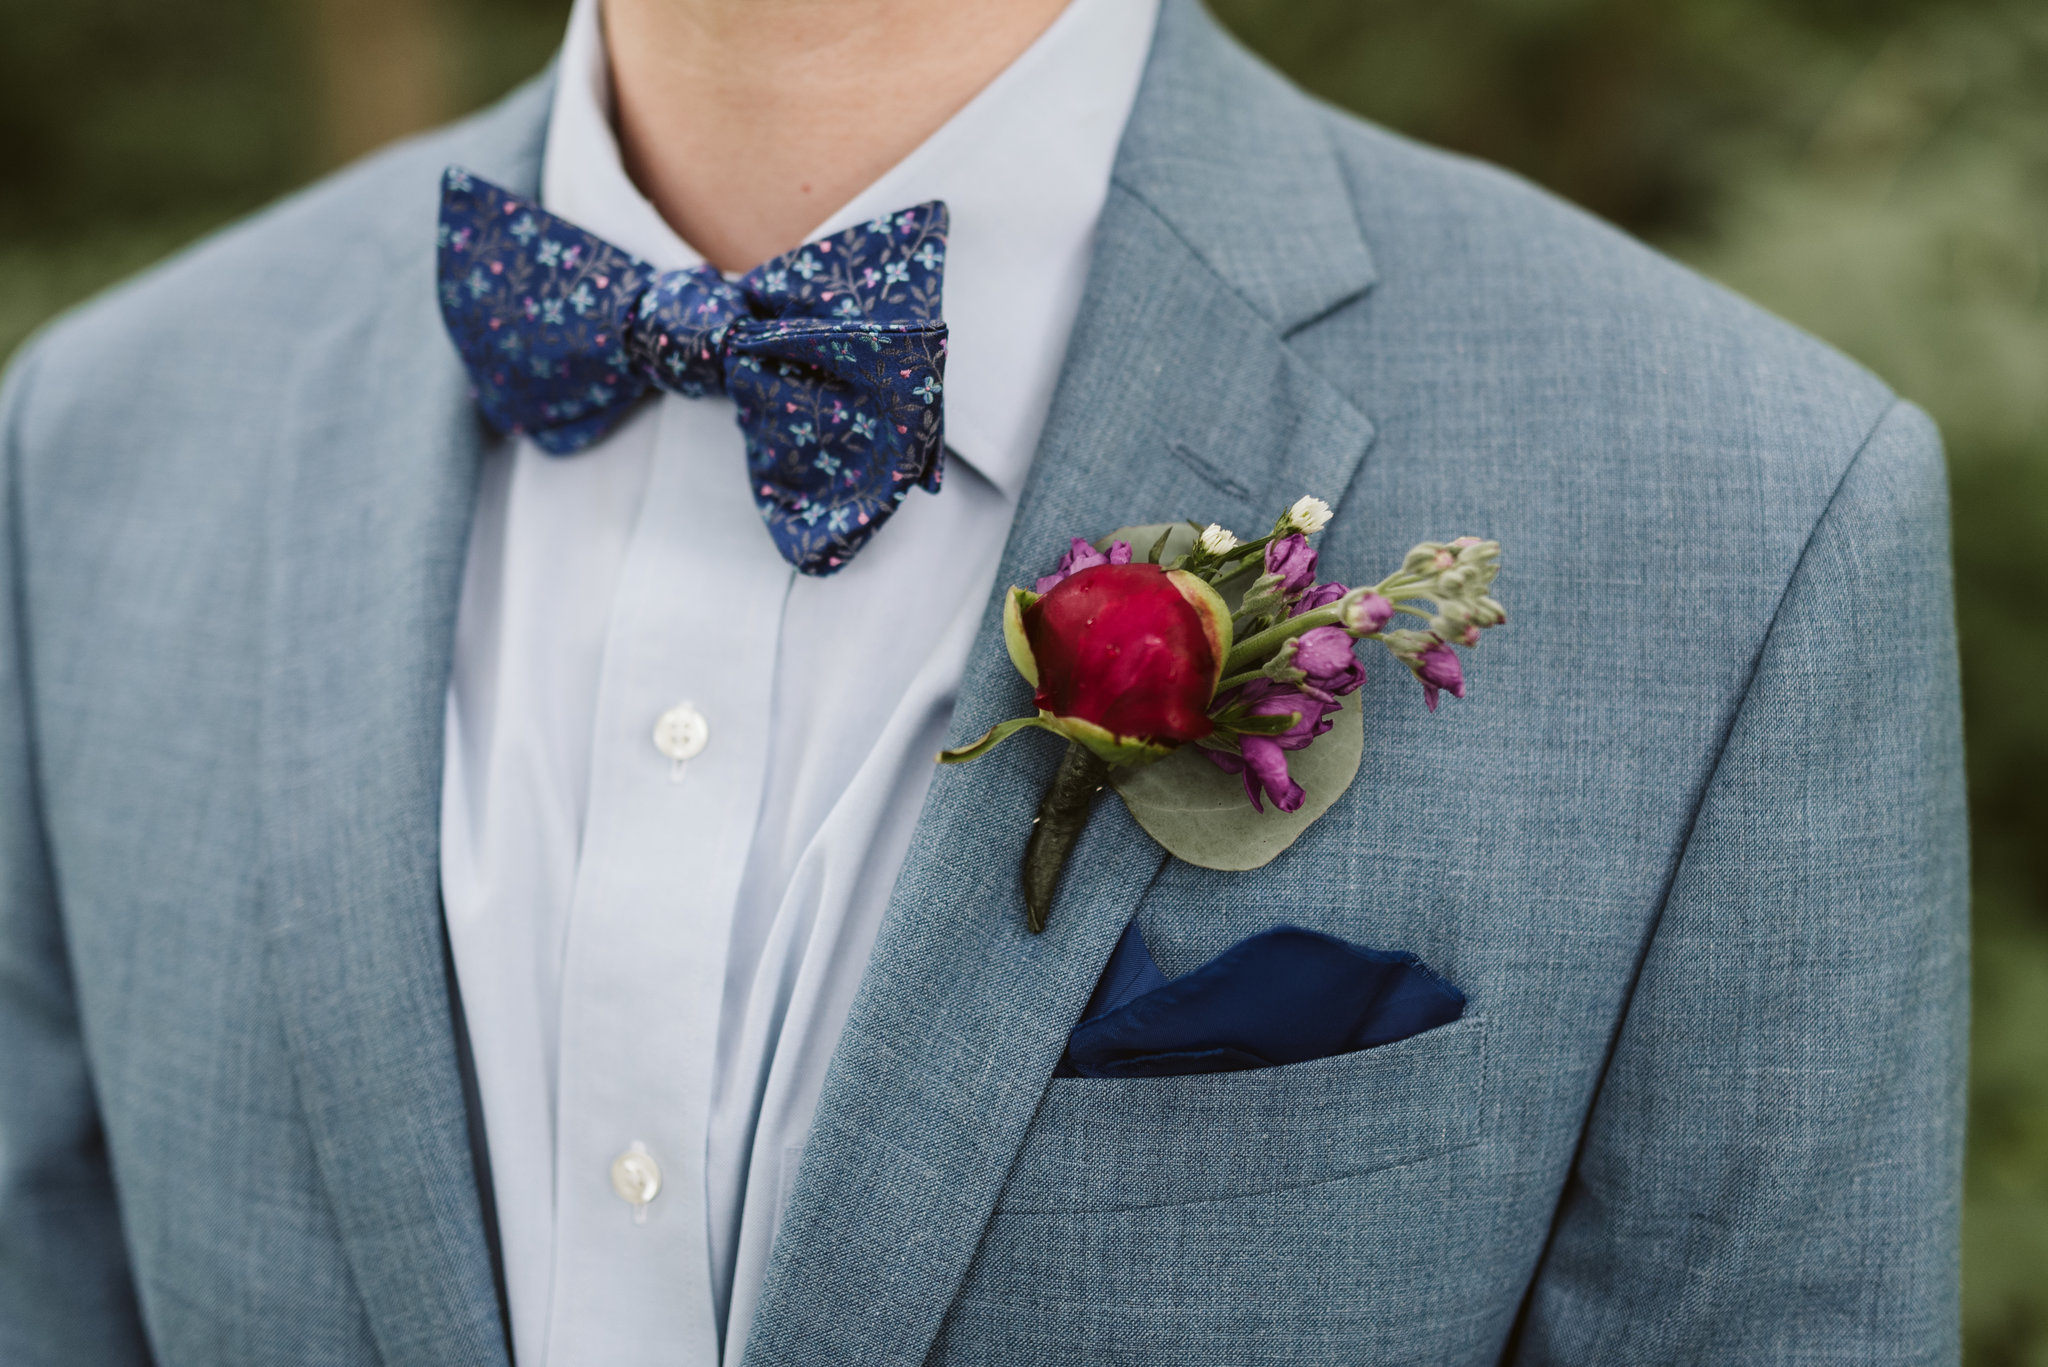  Annapolis, Quaker Wedding, Maryland Wedding Photographer, Intimate, Small Wedding, Vintage, DIY, Blue Suit, Blue Floral Bowtie, Closeup of Boutonniere 